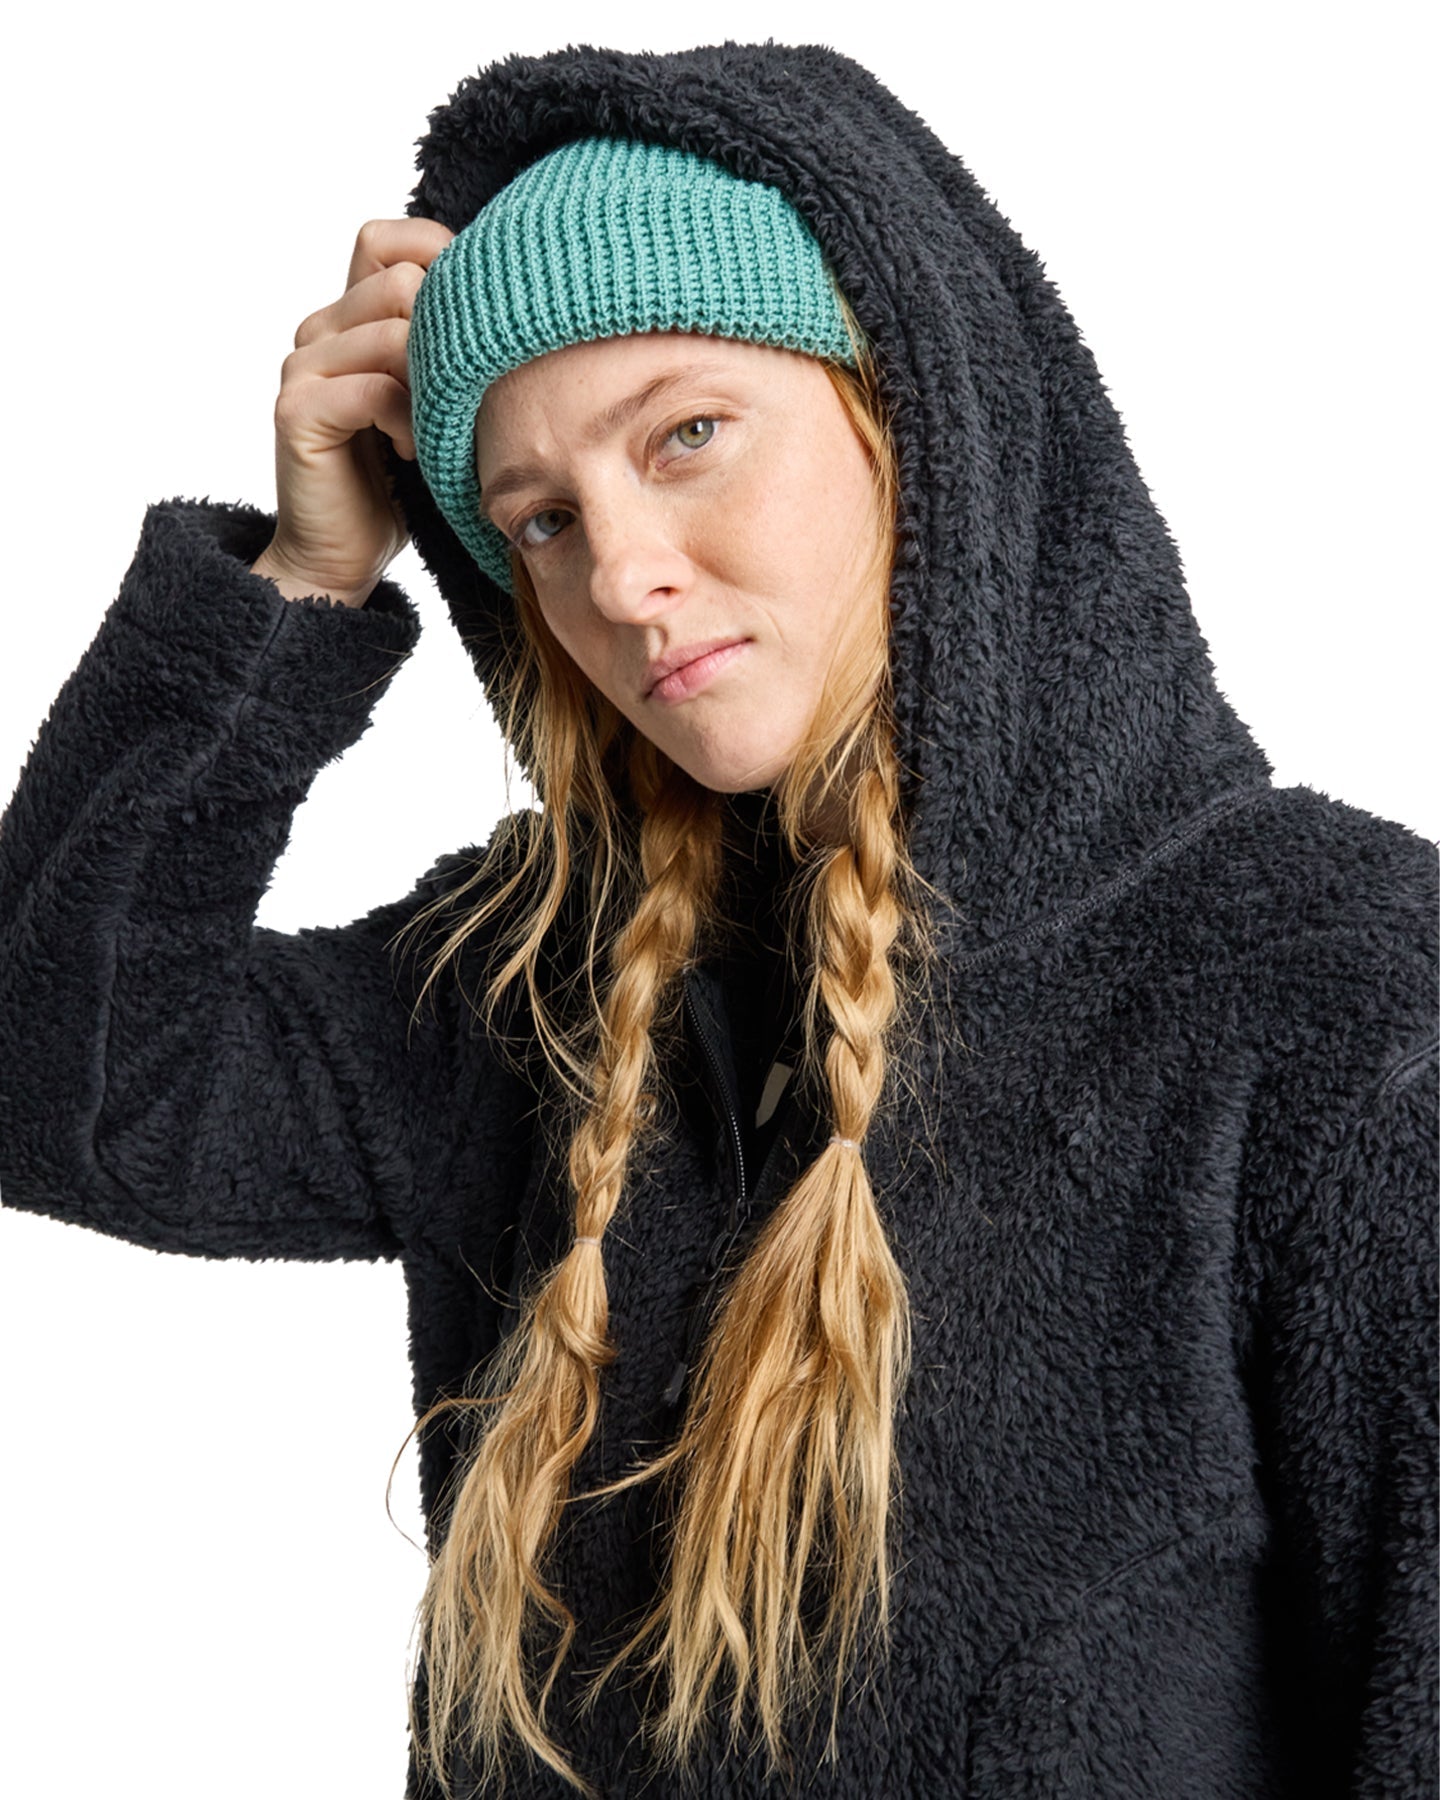 Burton Women's Minxy Hi-Loft Fleece Full-Zip - True Black Jackets - Trojan Wake Ski Snow